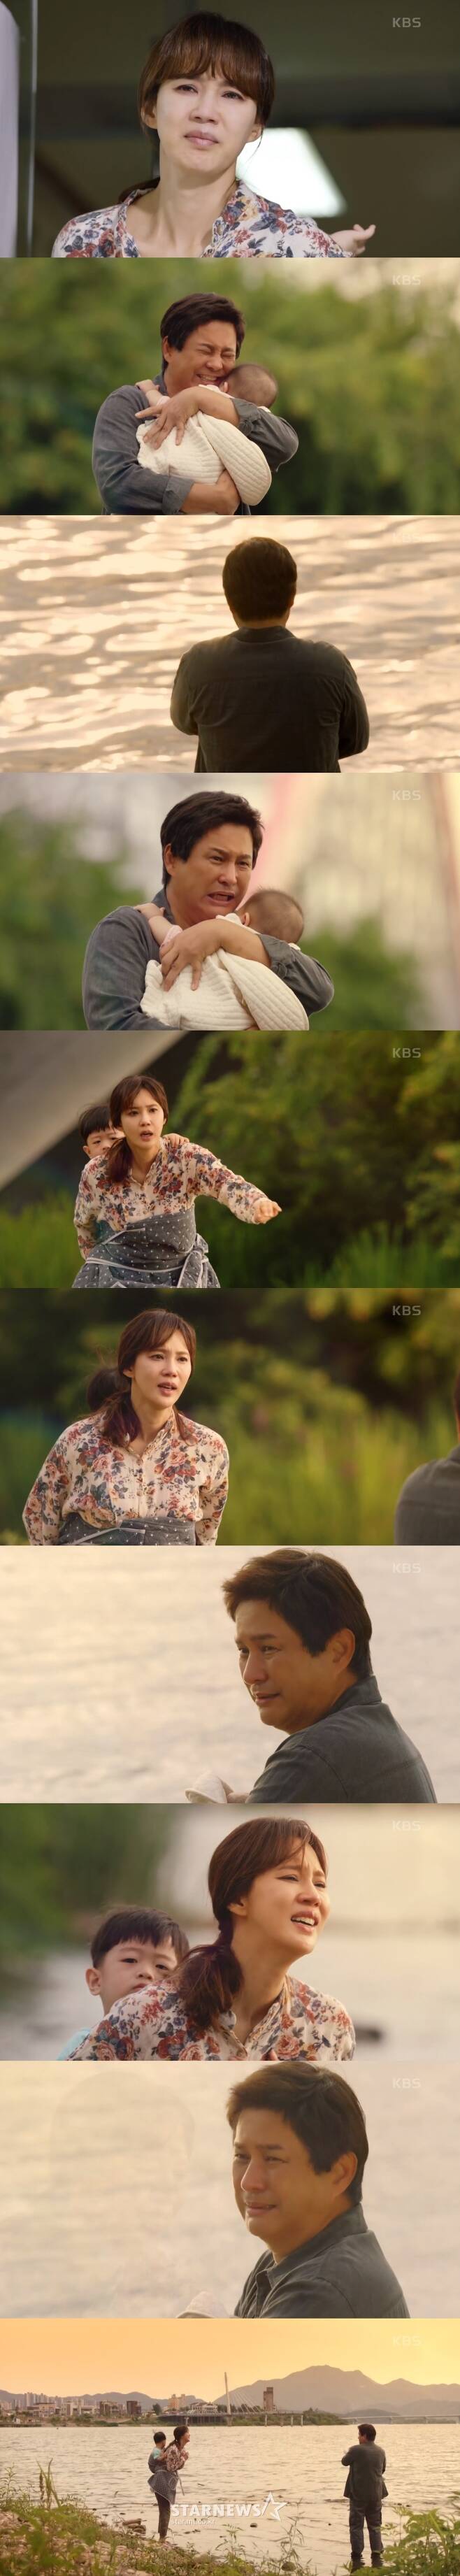 KBS 2TV '신사와 아가씨' 임영웅 OST '사랑은 늘 도망가' 삽입 장면